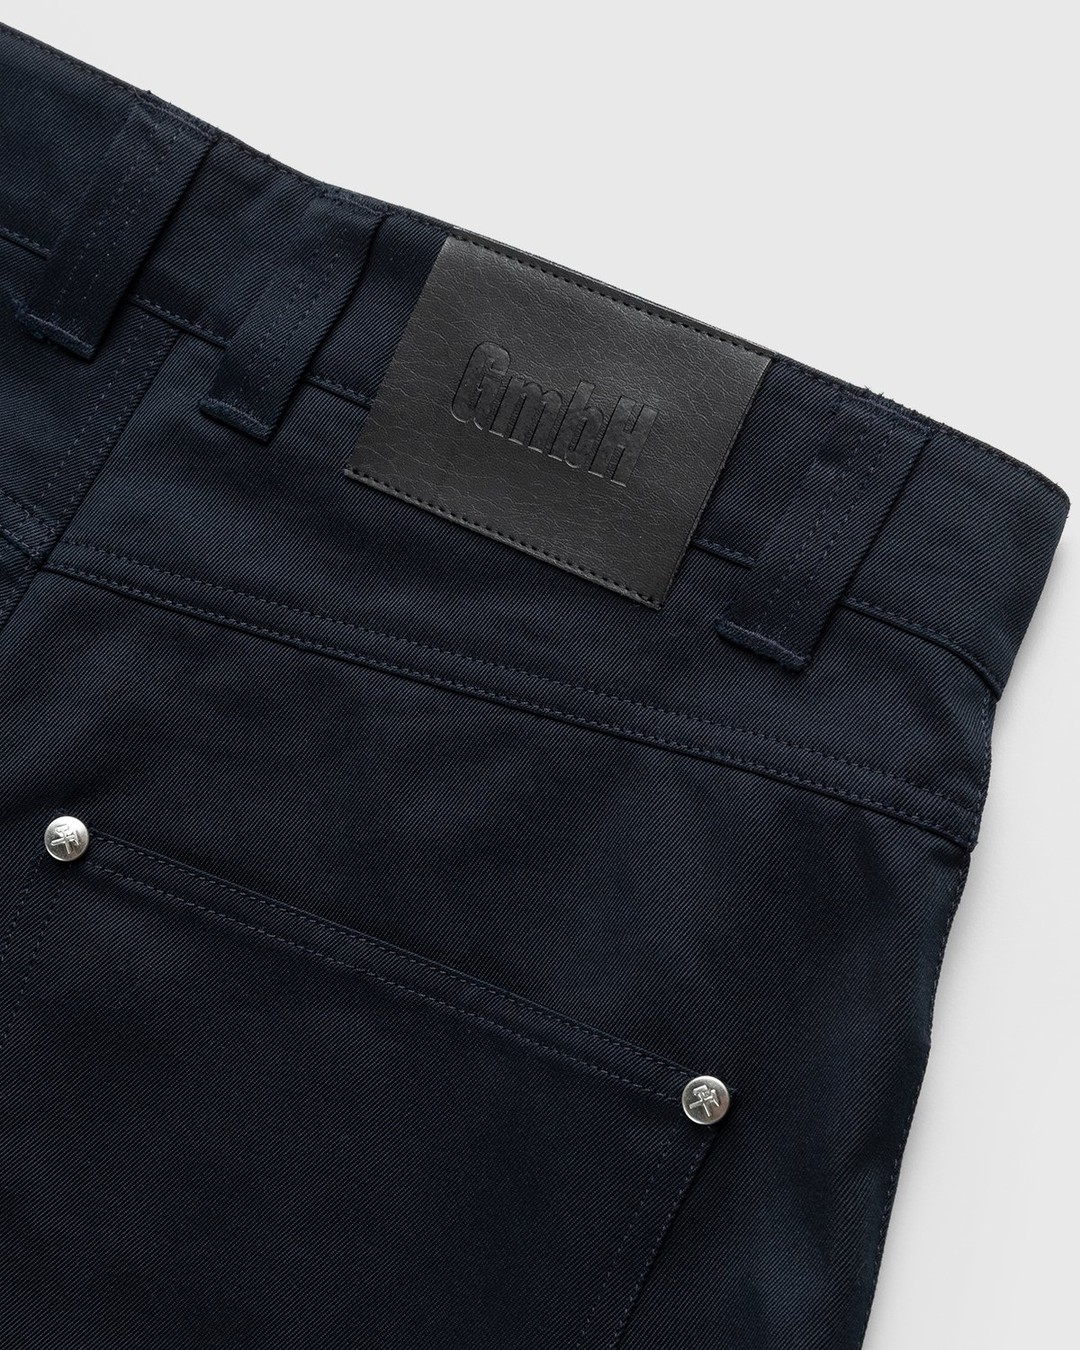 GmbH – Alvan Denim Trousers Navy - Denim - Blue - Image 3